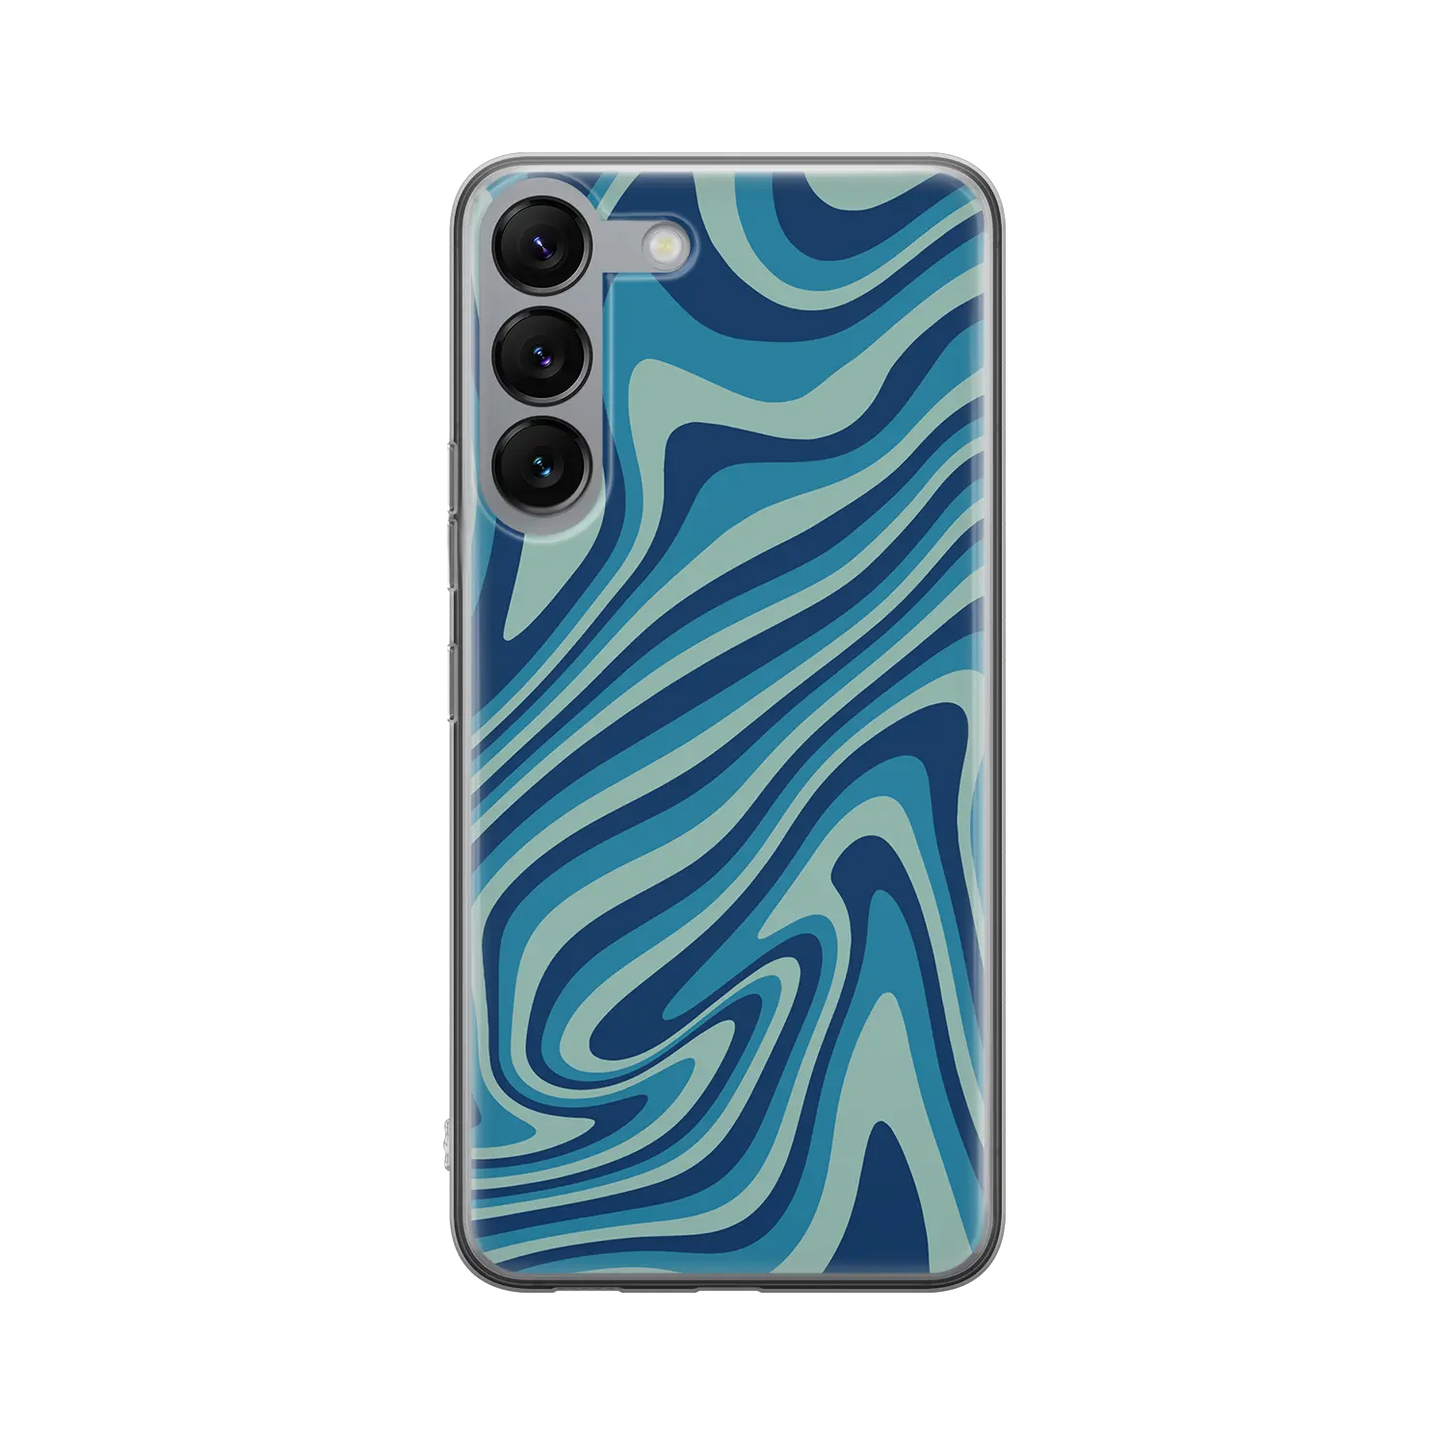 Groovy - Custom Galaxy S Case